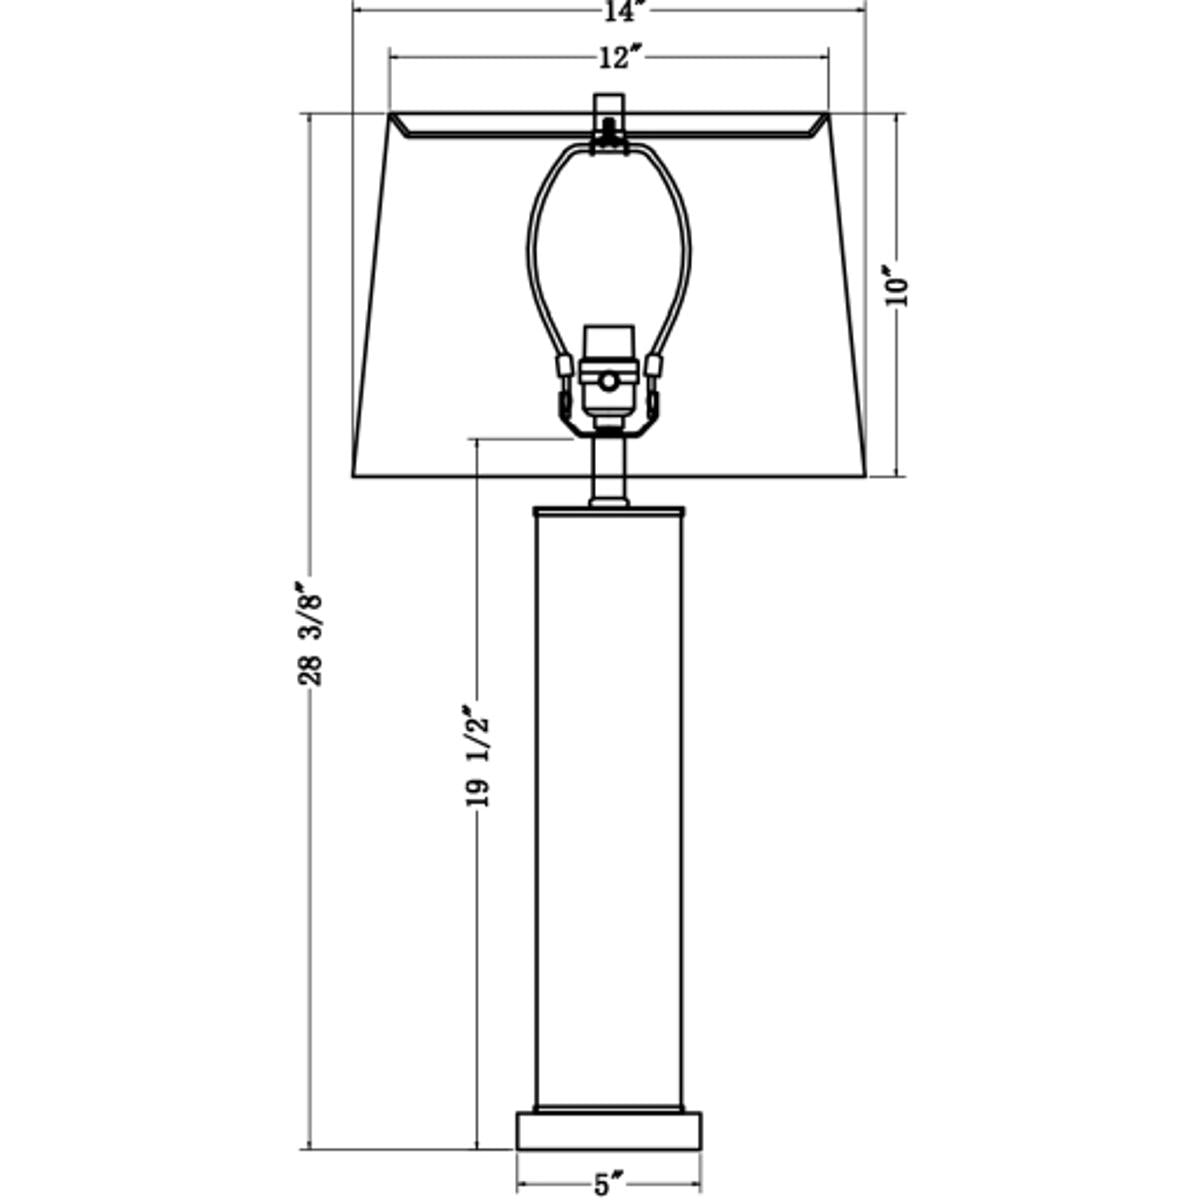 Surya Nials Table Lamp